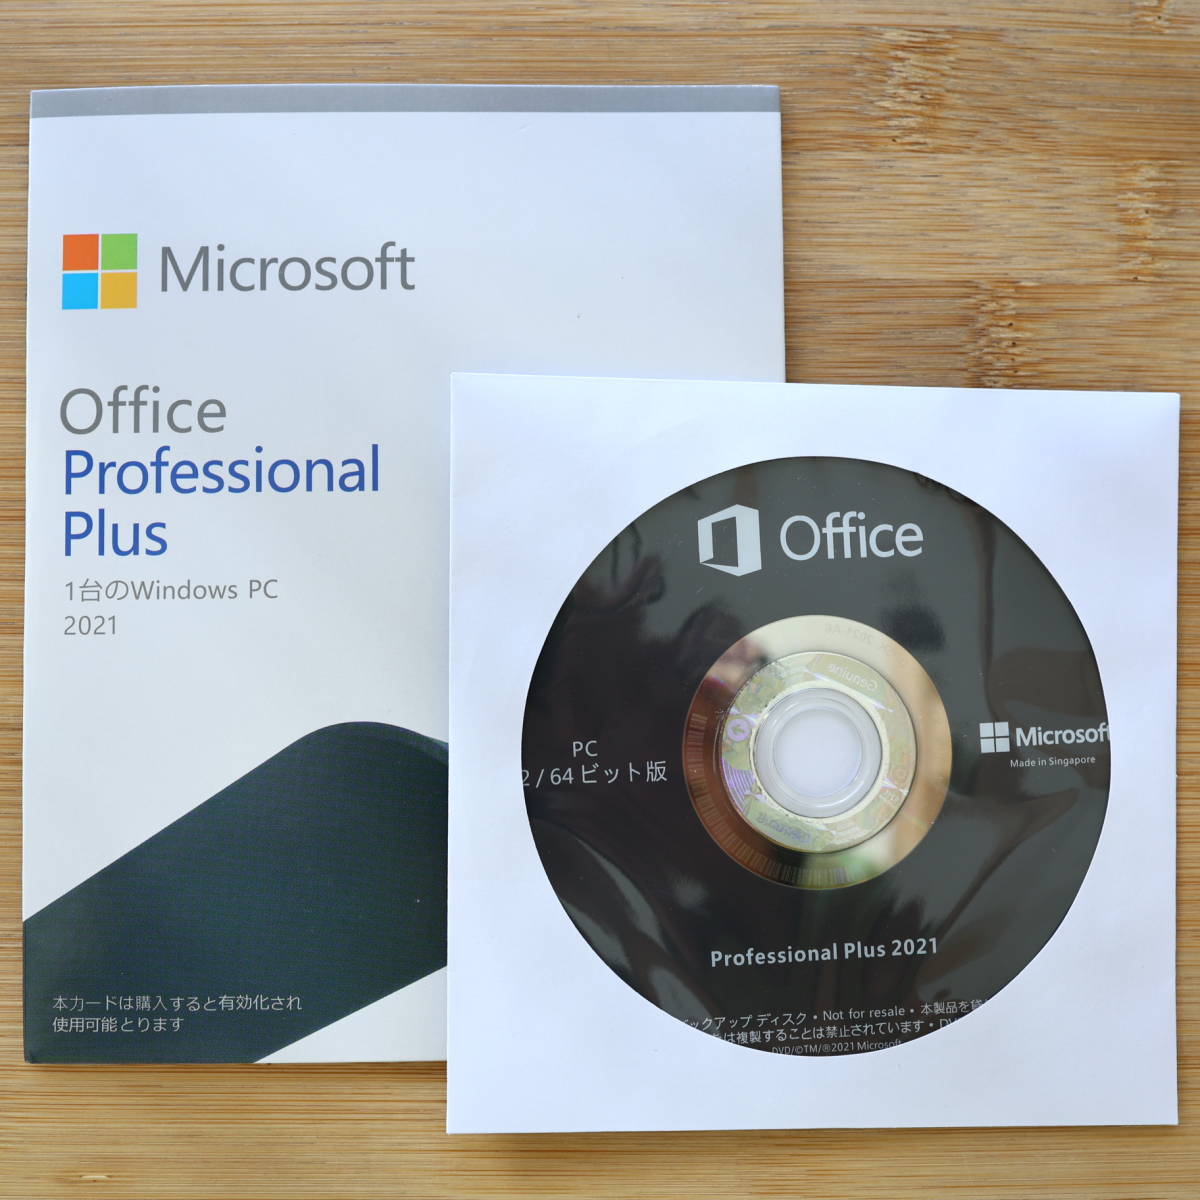 Microsoft Office Professional Plus 2021 DVD 永続版■一発オンライン認証プロダクトキー付き■認証保証■Pro Plus 2021　23_画像1